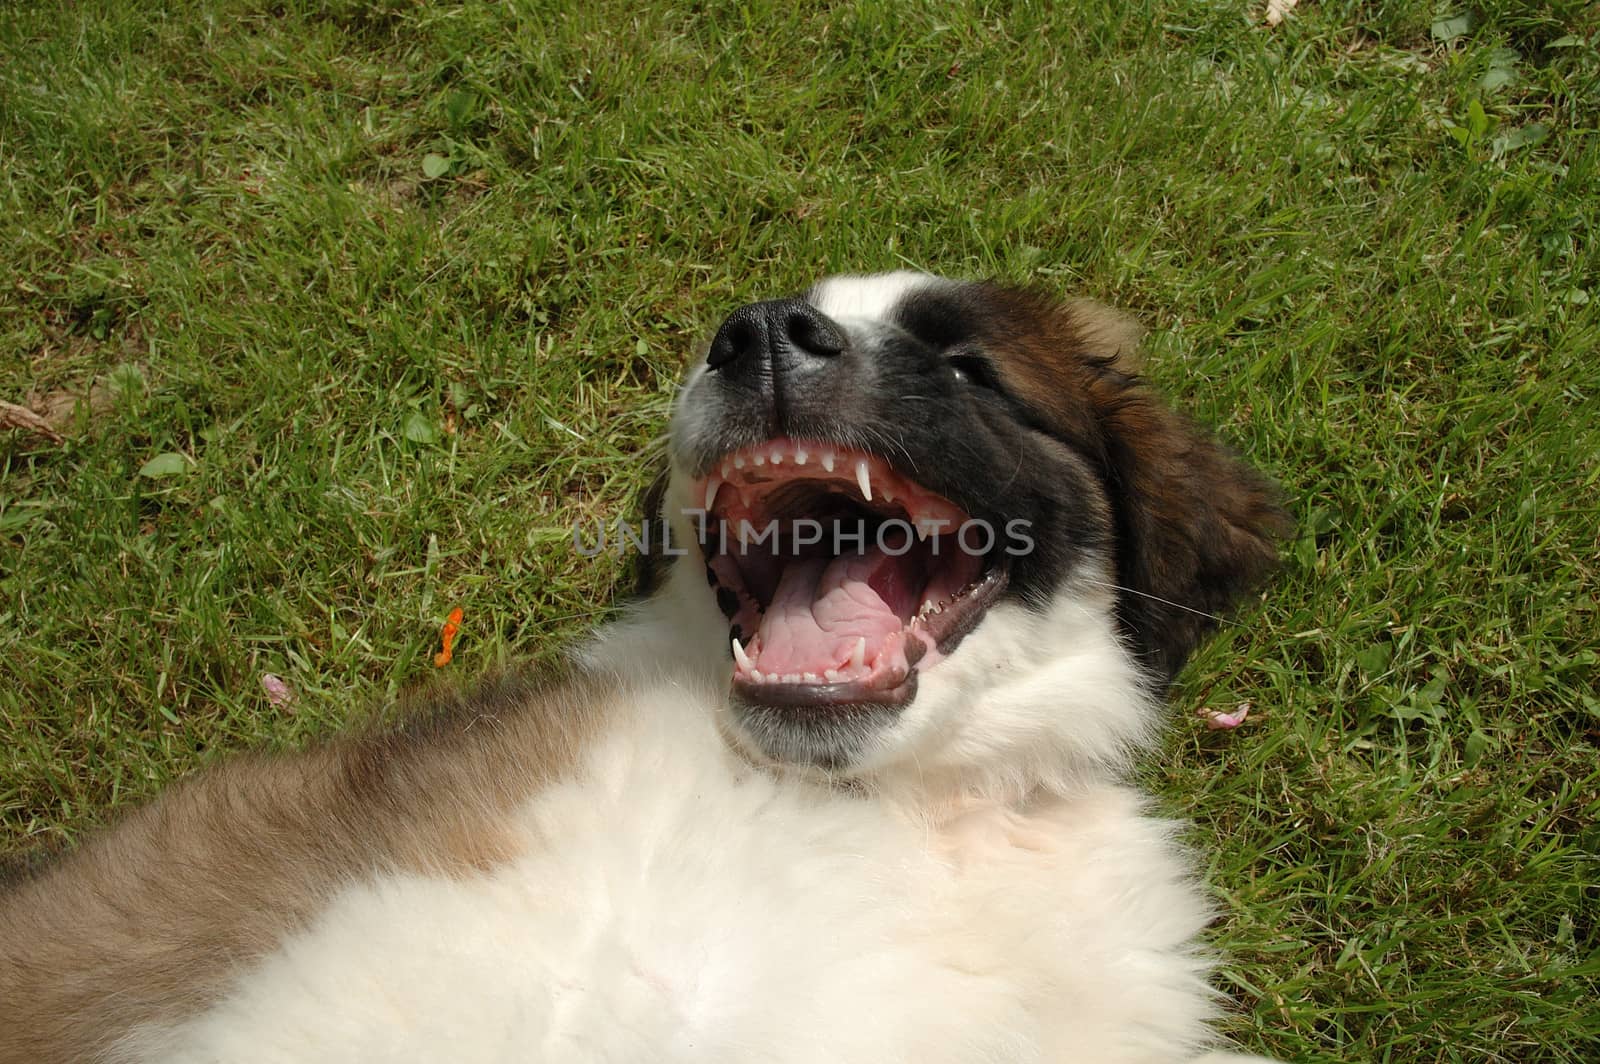 Dog lying on grass and having fun